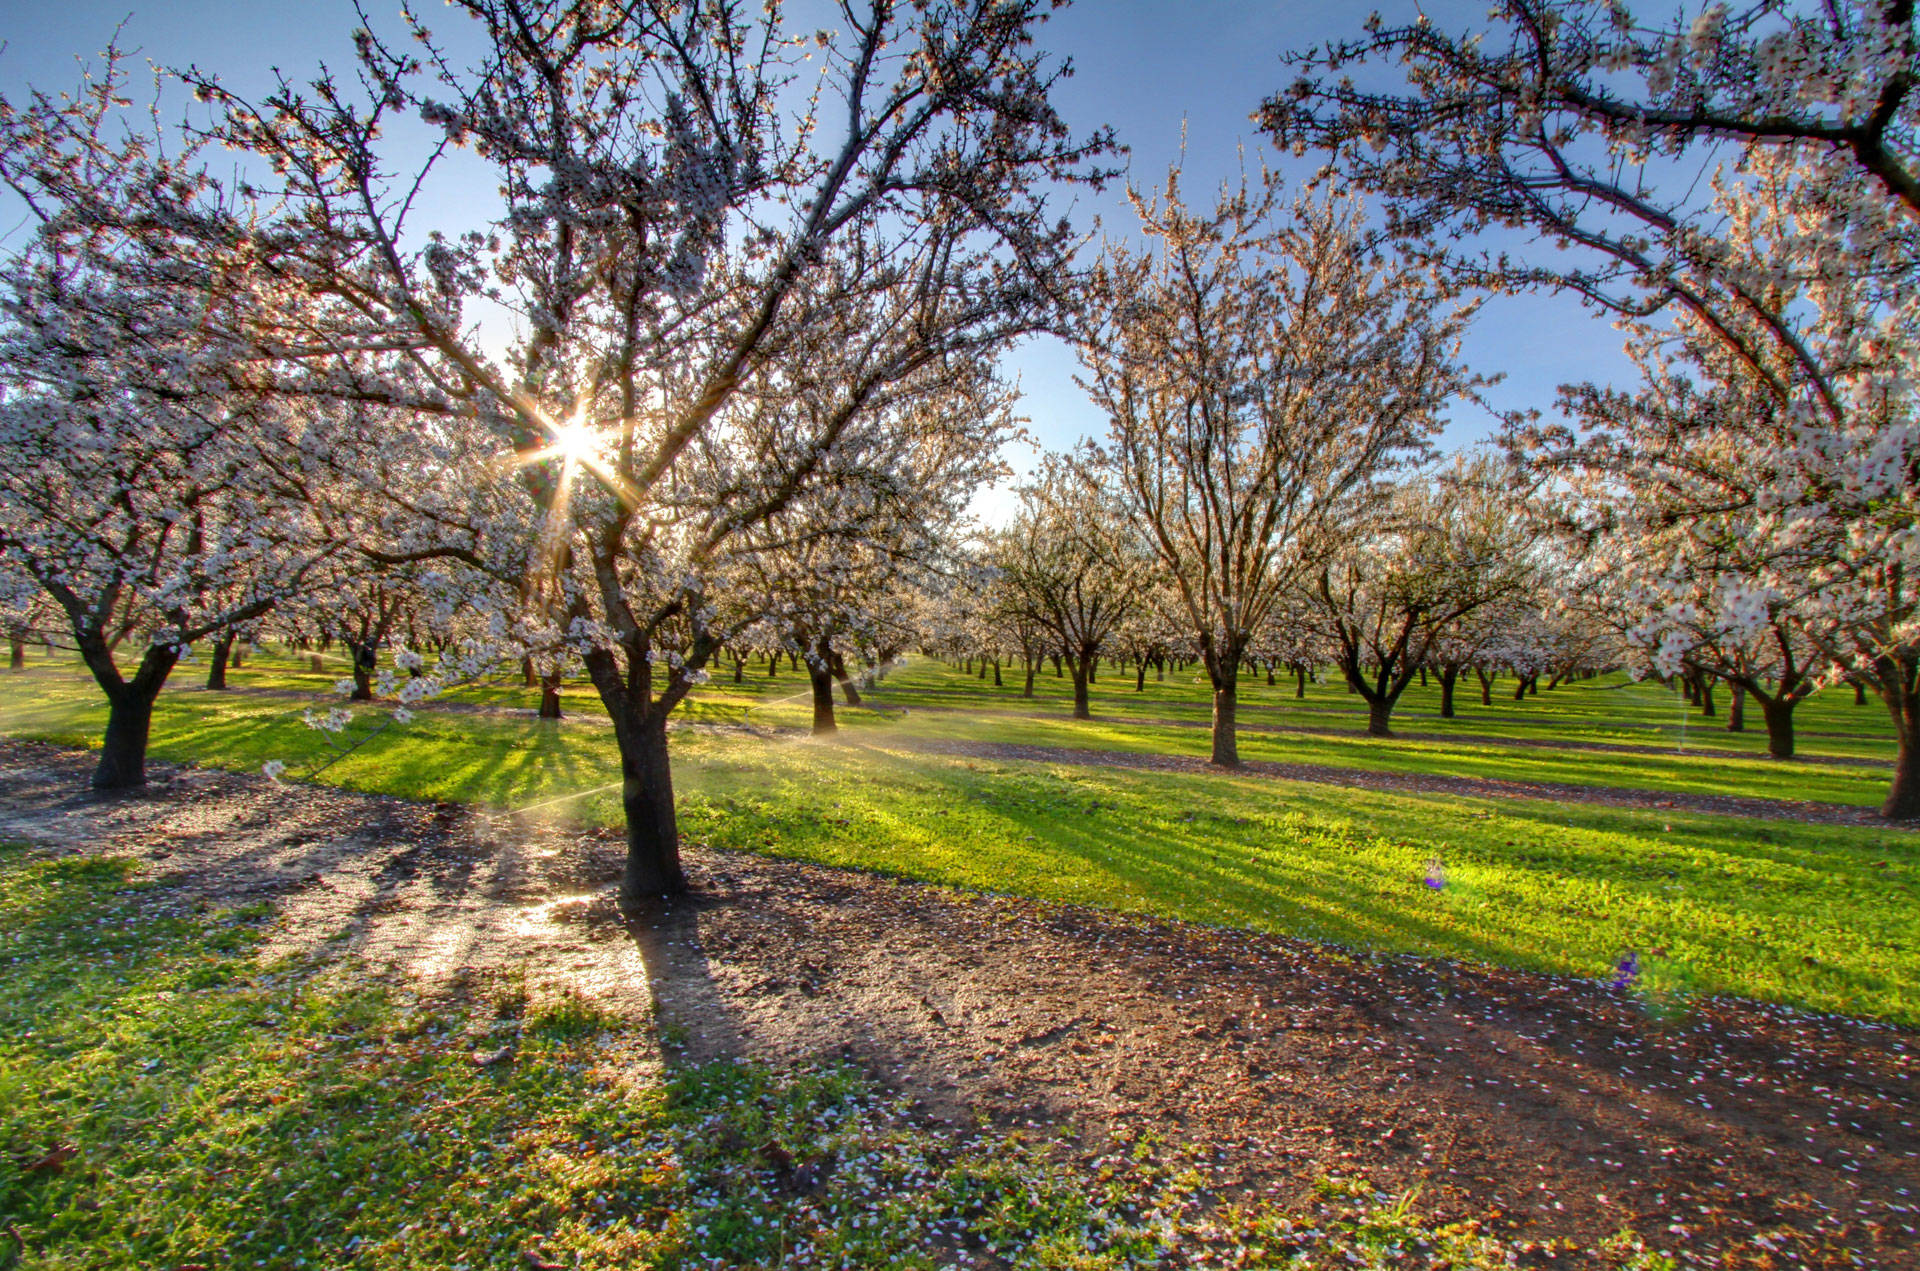 An almond orchard in the Sacramento Valley, near Chico. <a href="https://flic.kr/p/bAteuc" target="_blank">Nicholas D. via Flickr</a>